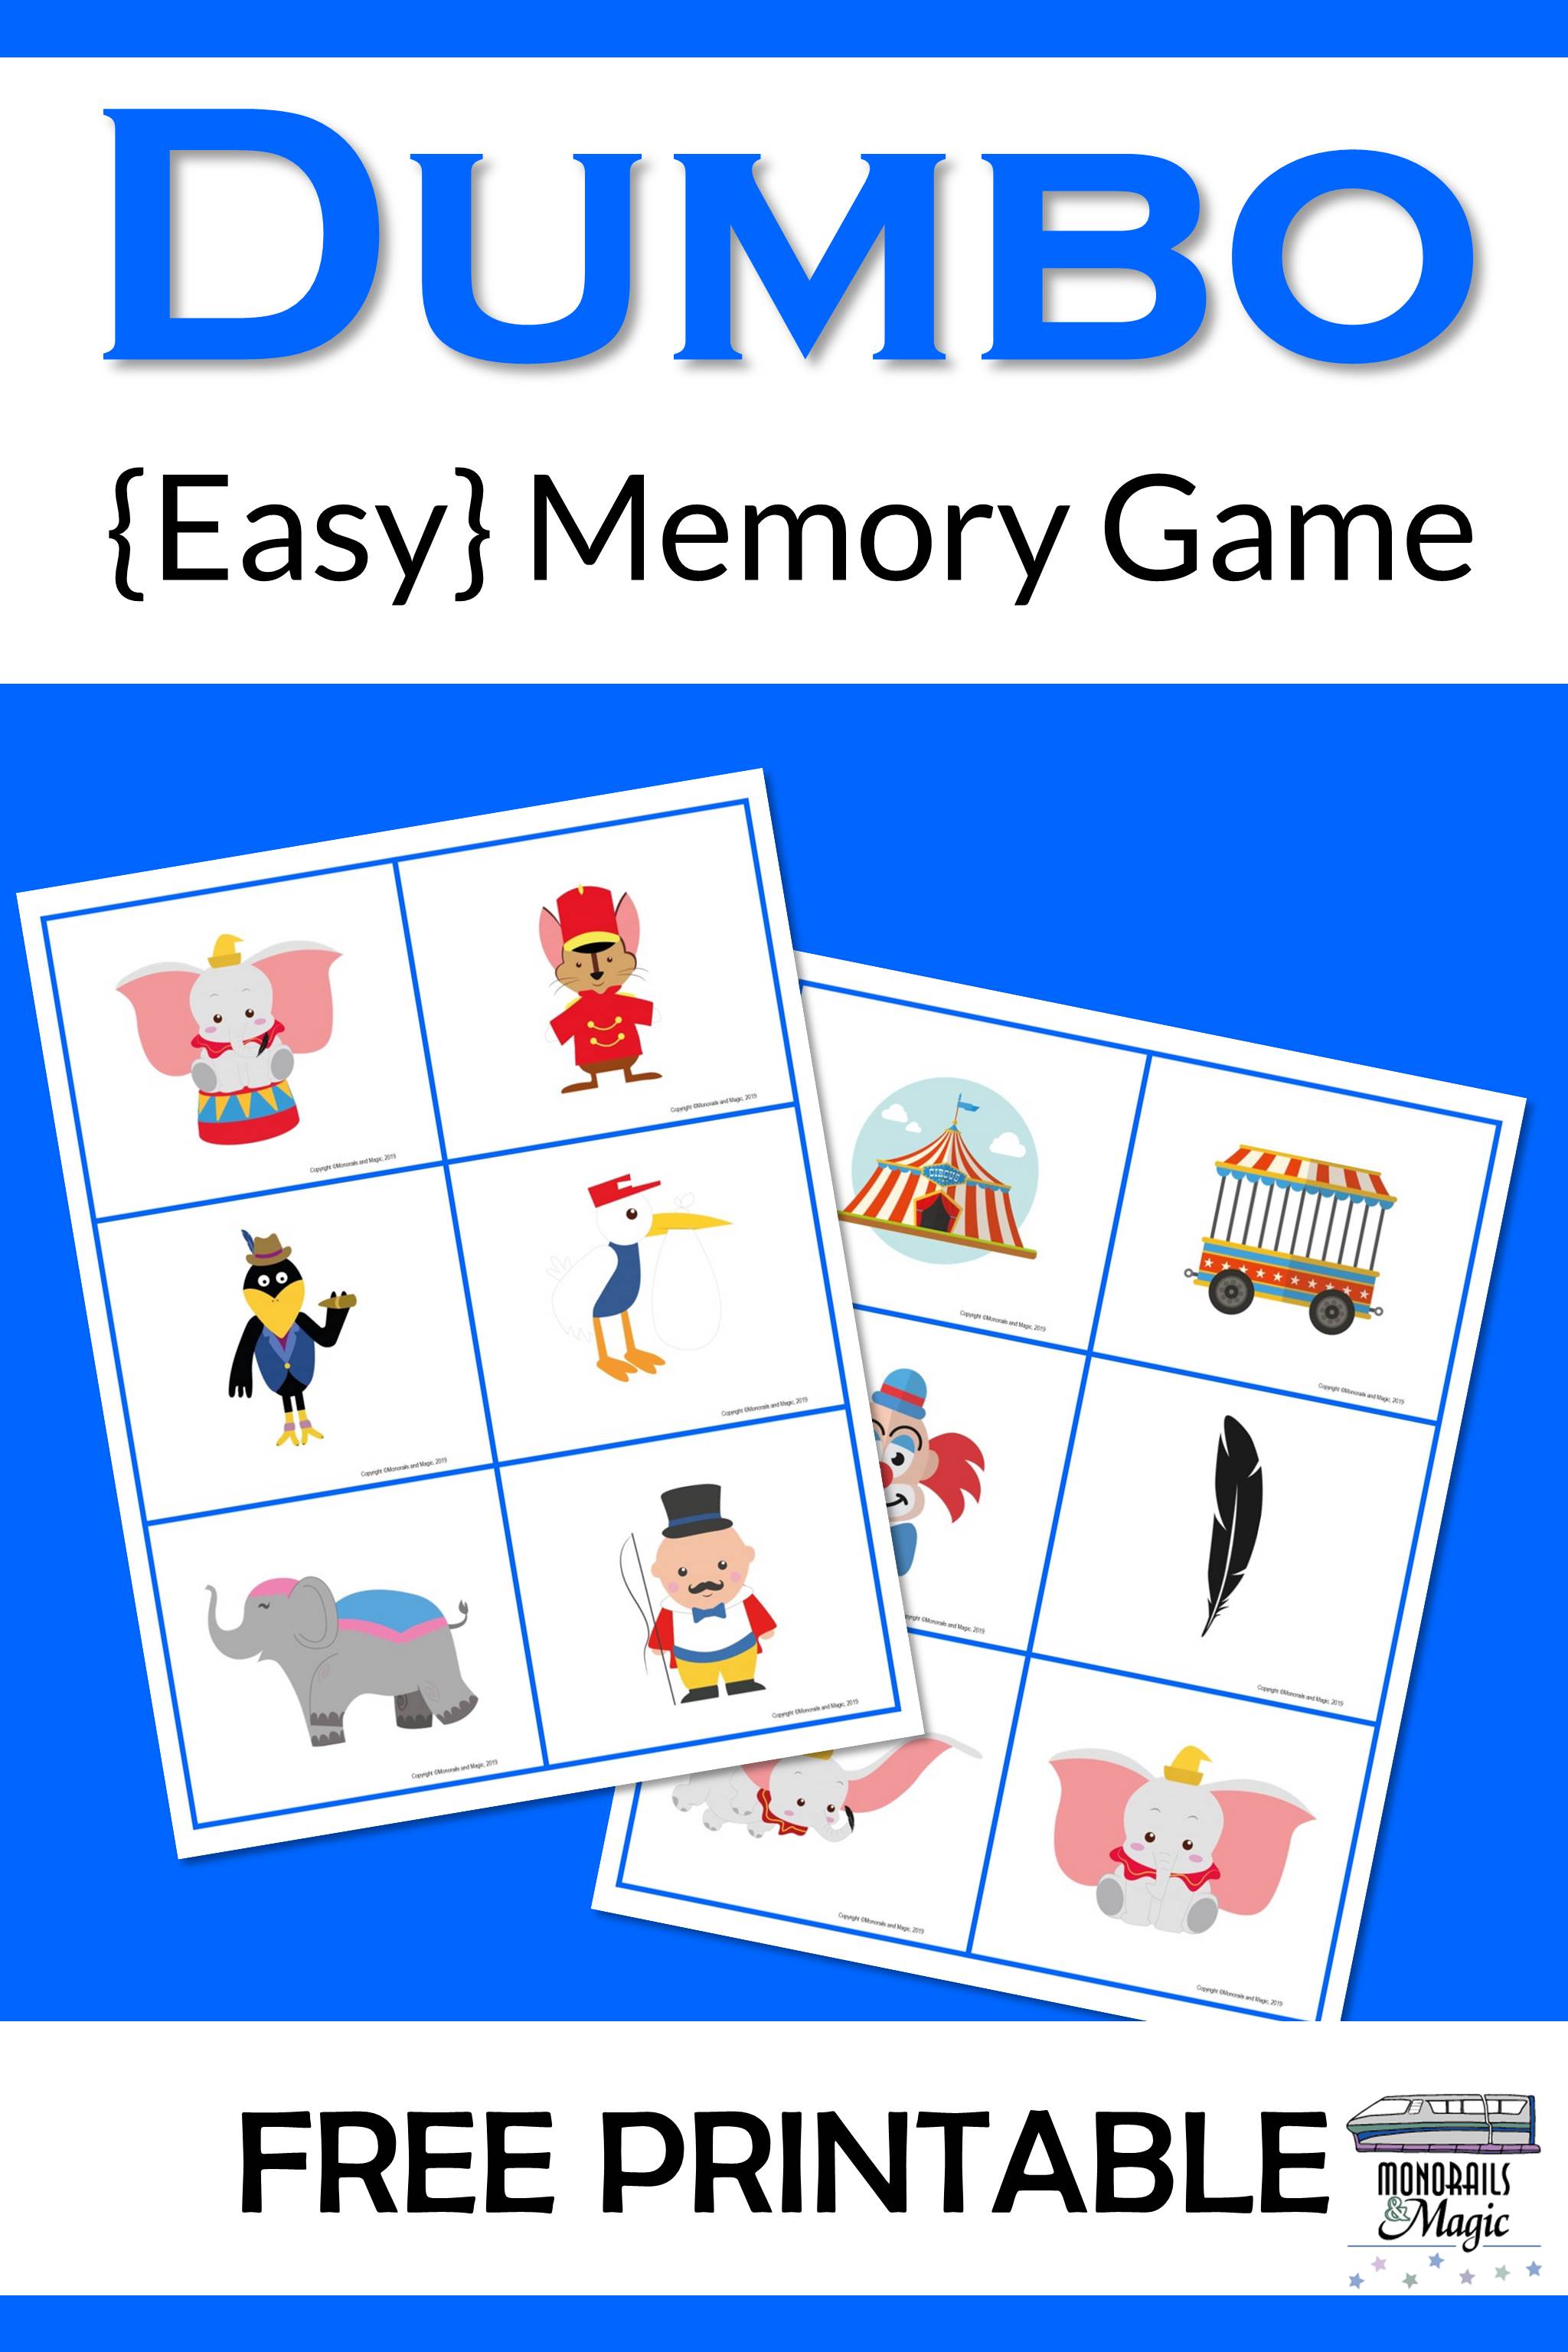 dumbo-memory-game-free-printable-monorails-and-magic